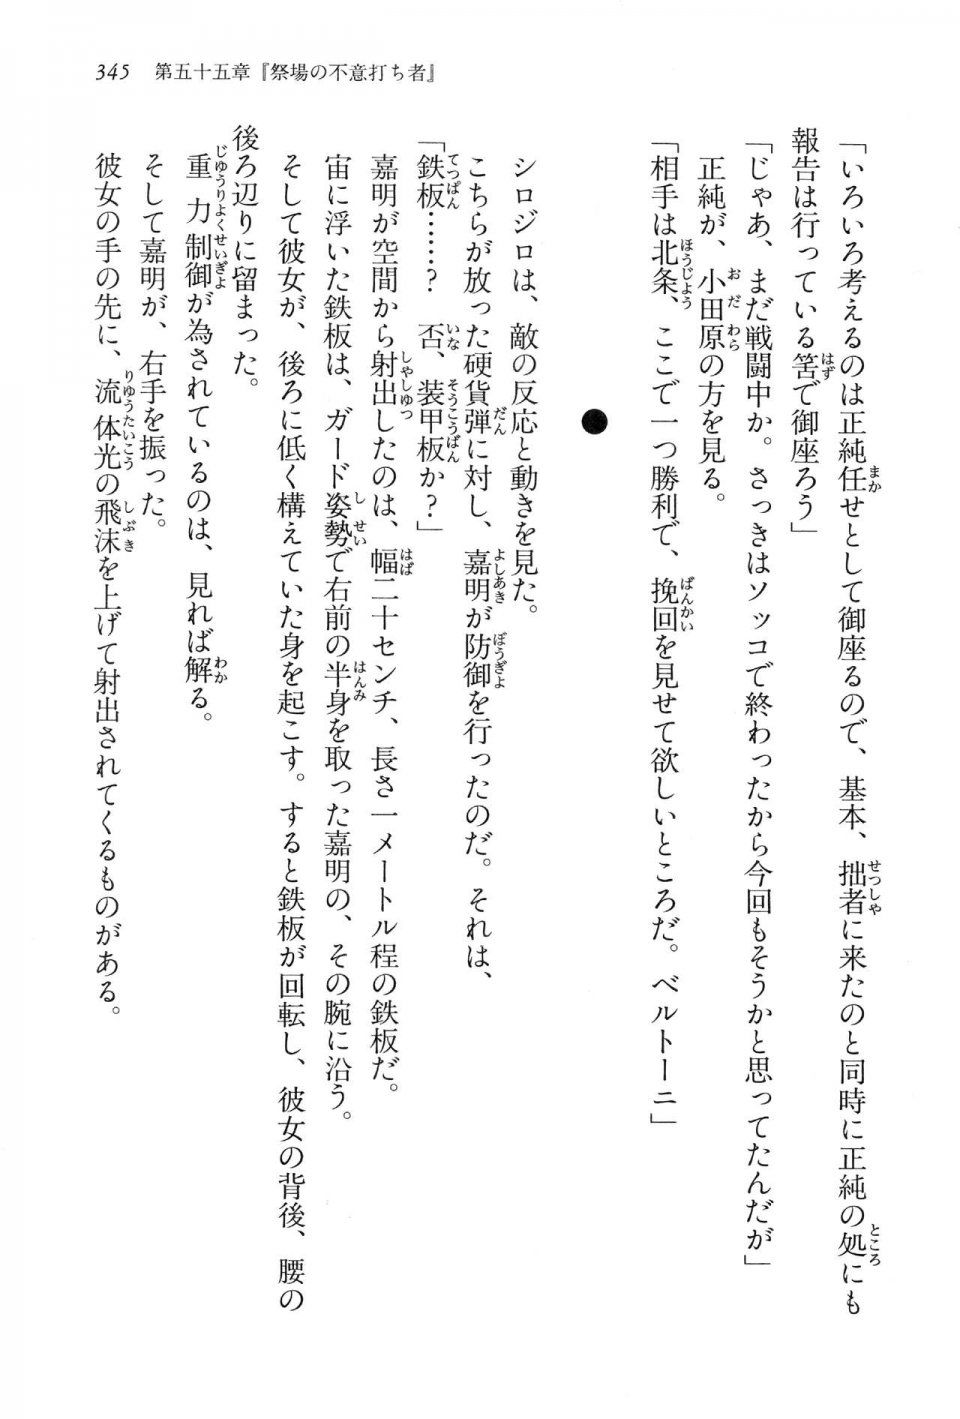 Kyoukai Senjou no Horizon LN Vol 15(6C) Part 1 - Photo #345